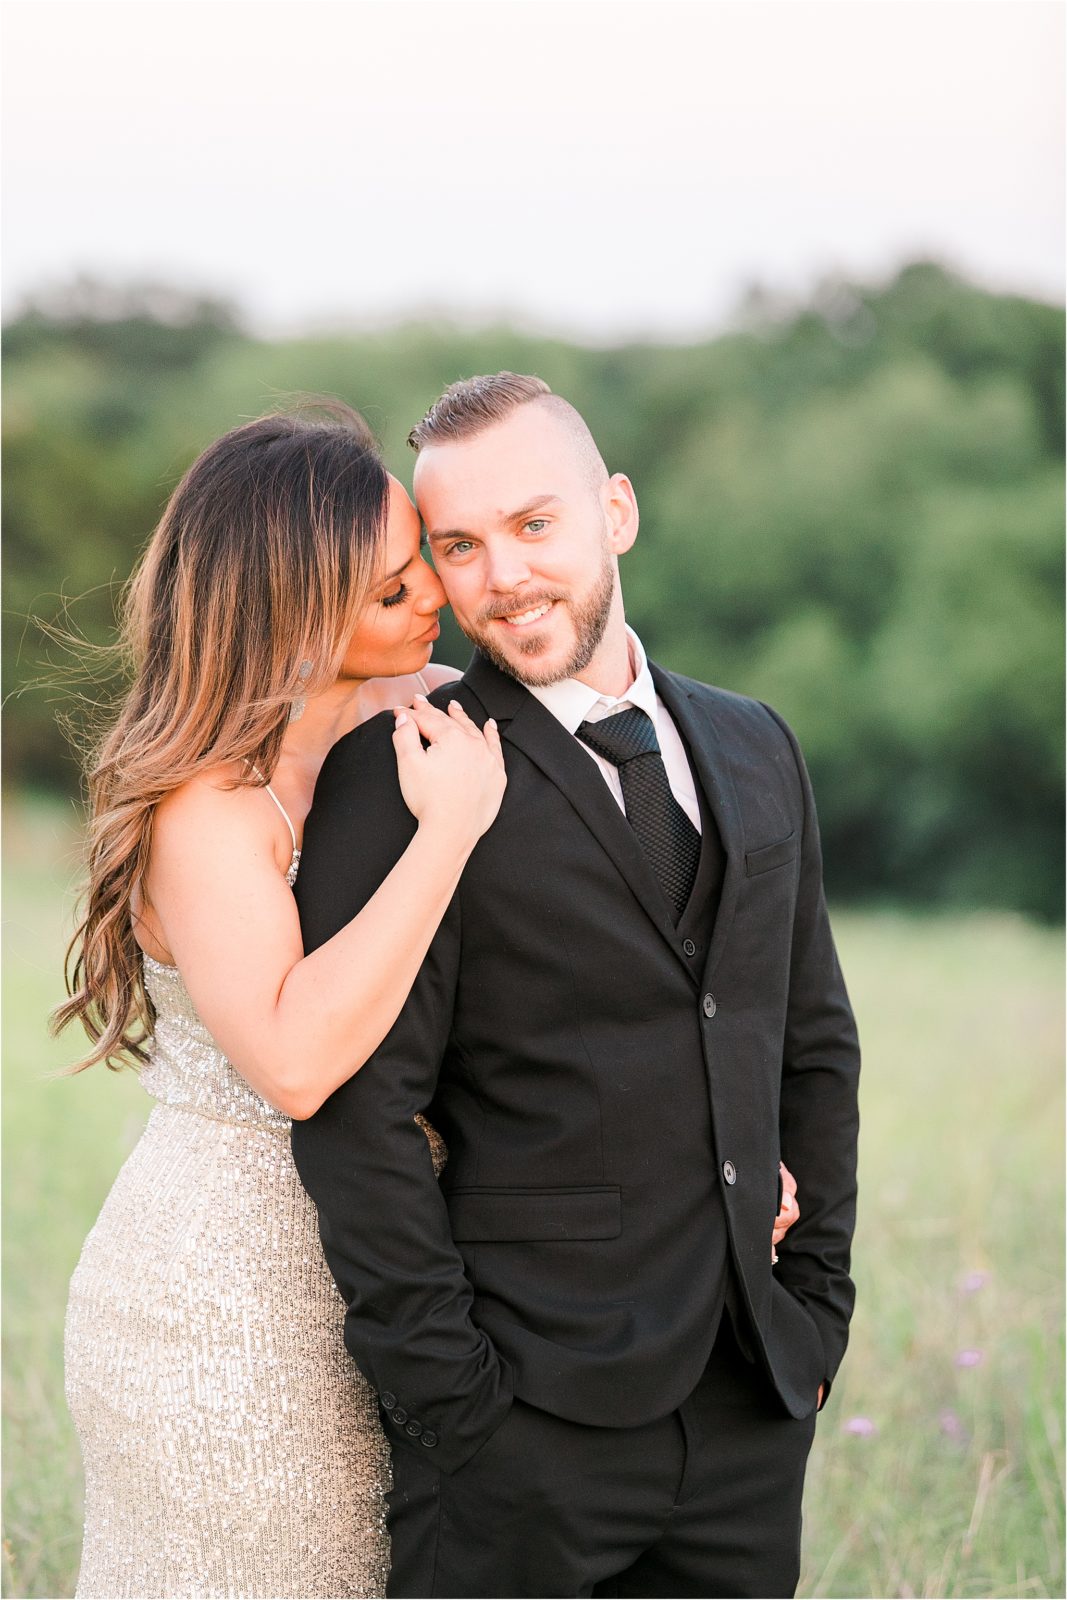 Outdoor DFW Engagement Session by Dallas Wedding Photographer Jillian Hogan Photography